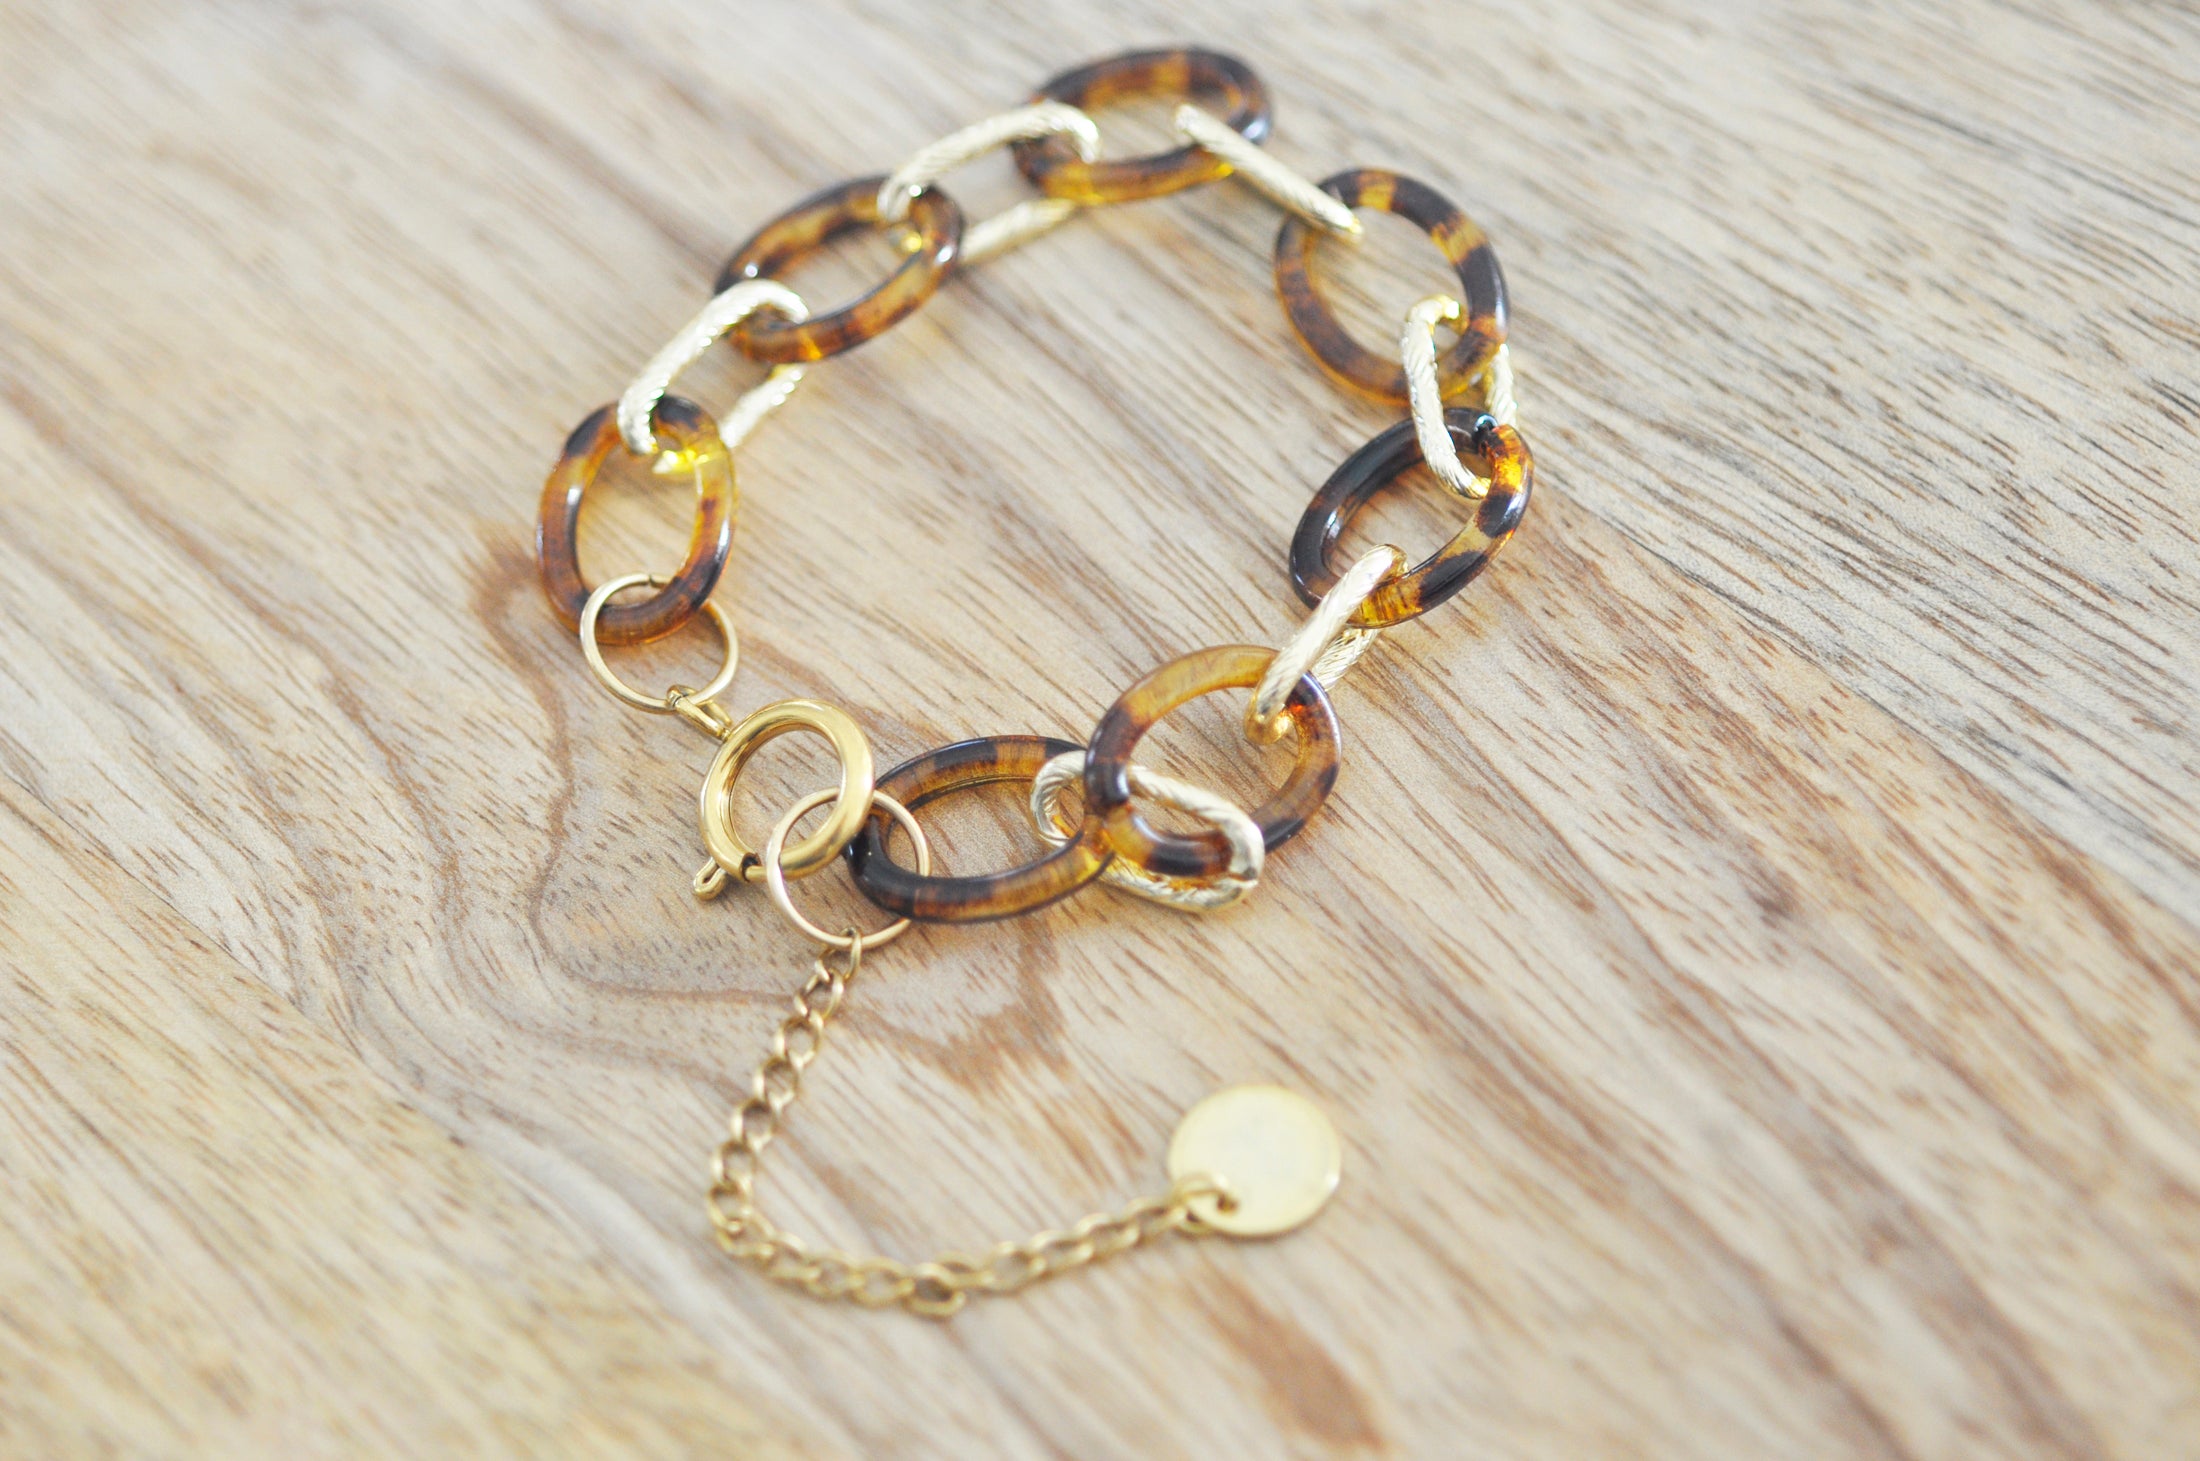 A tortoiseshell acrylic chain bracelet